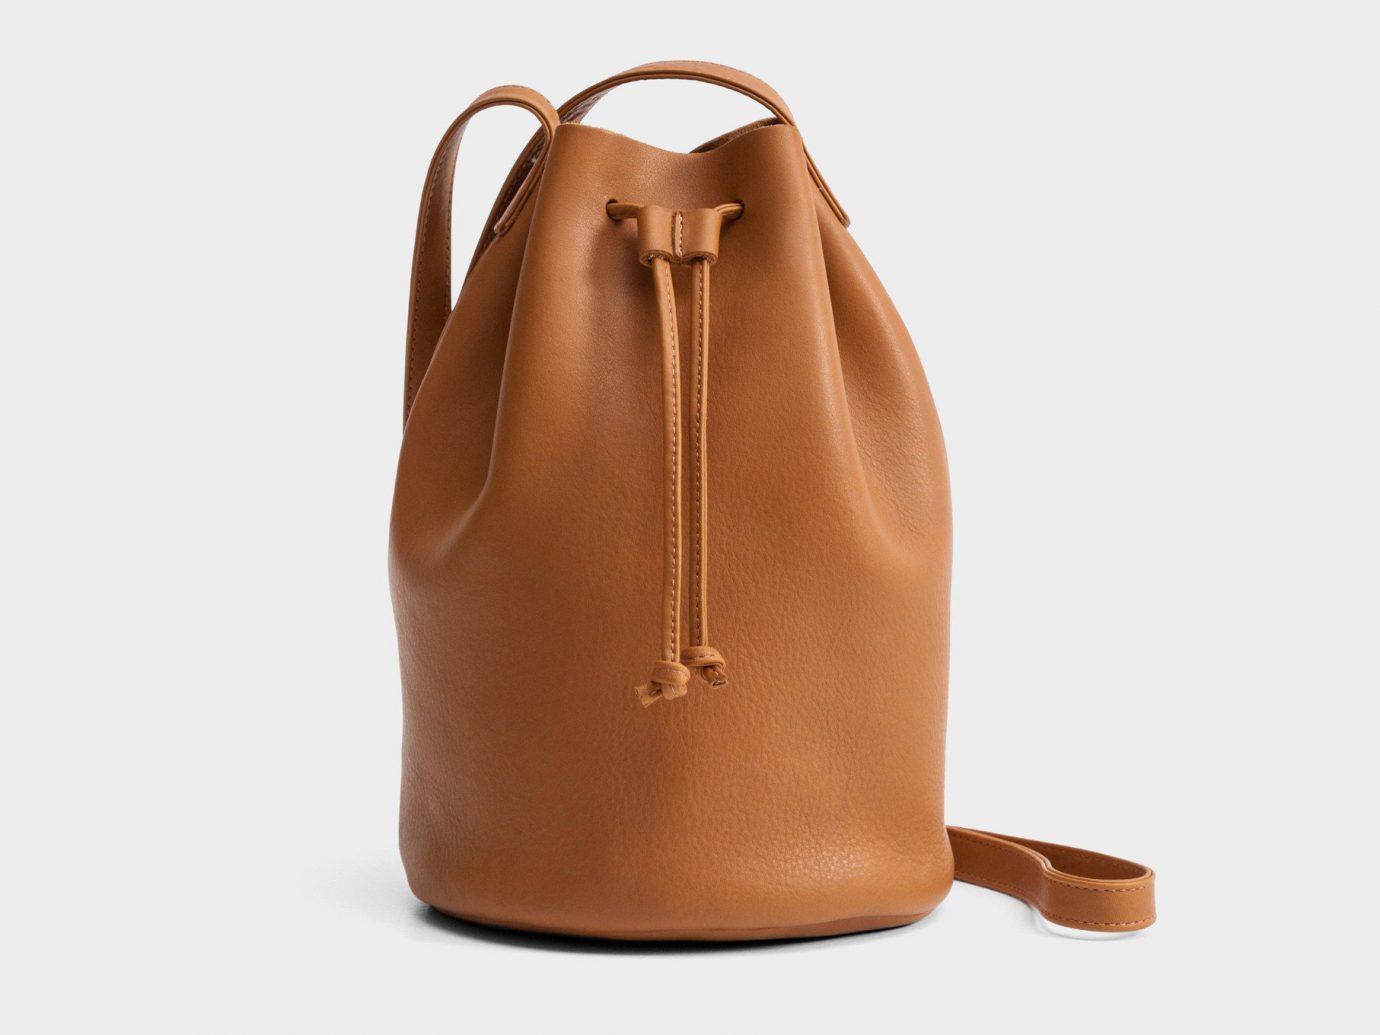 Girls Getaways Trip Ideas Weekend Getaways bag brown leather product handbag caramel color shoulder bag accessory product design tan